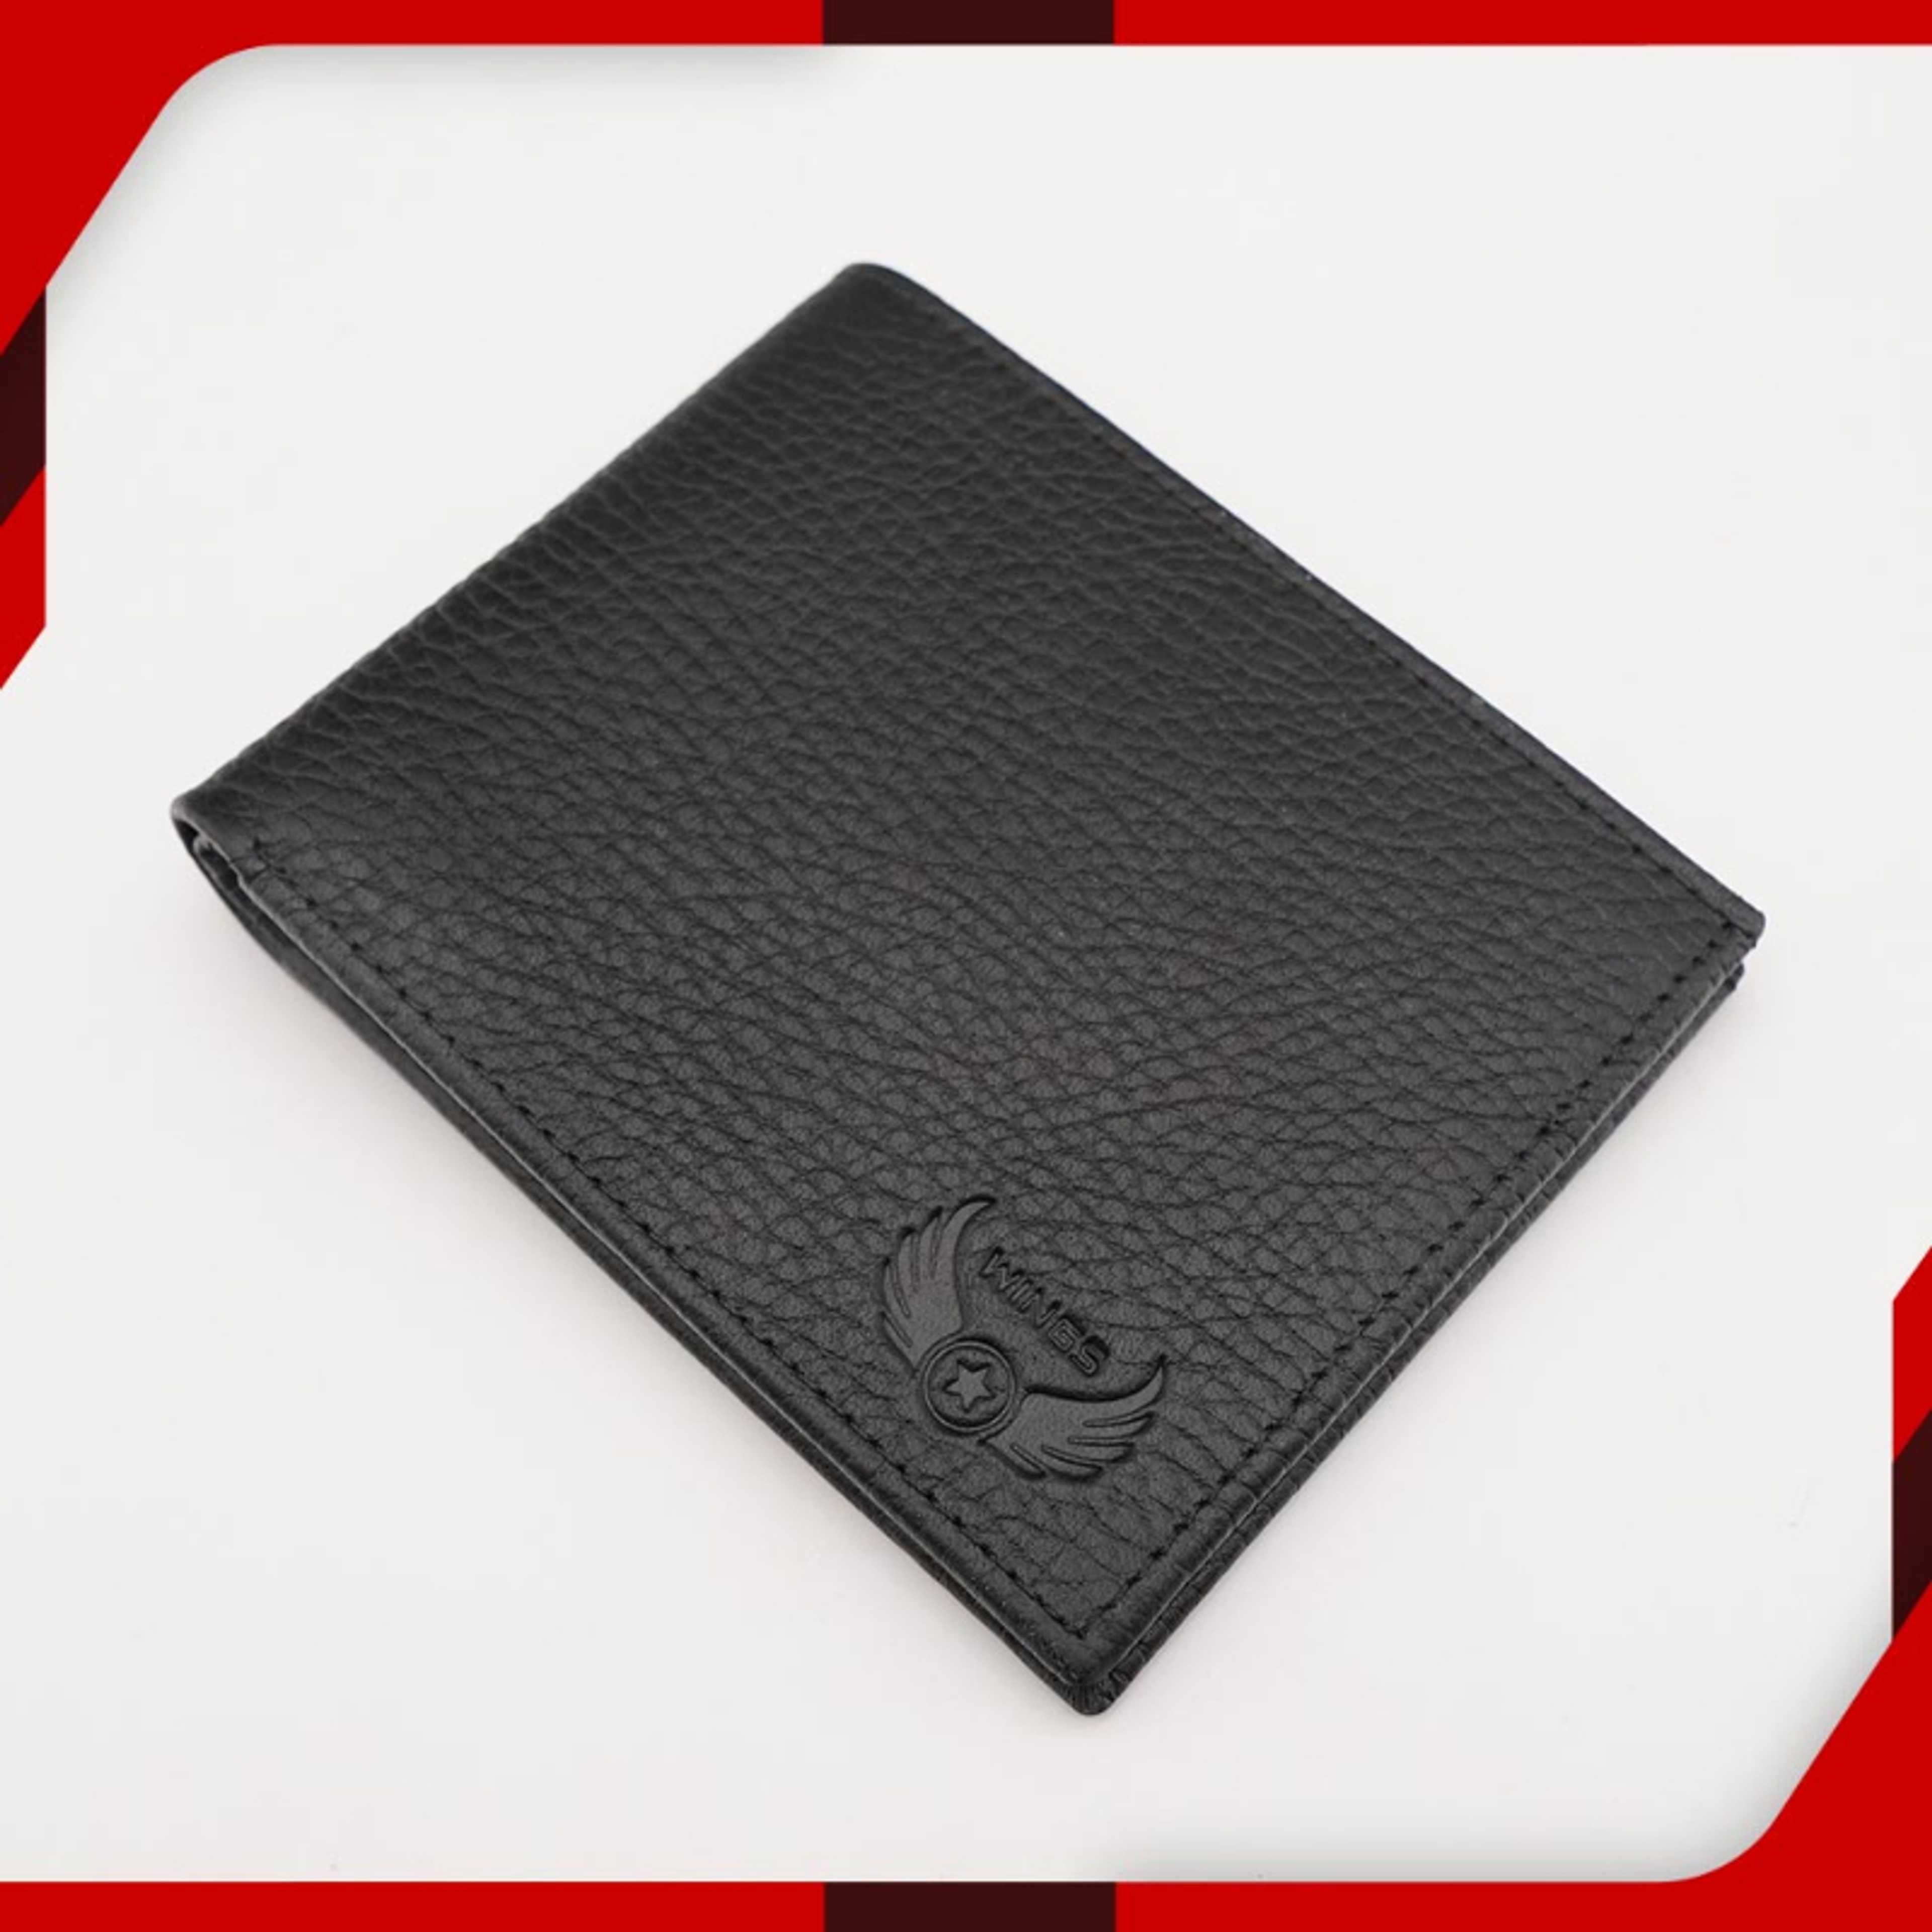 Texture Black Leather Wallets for Men